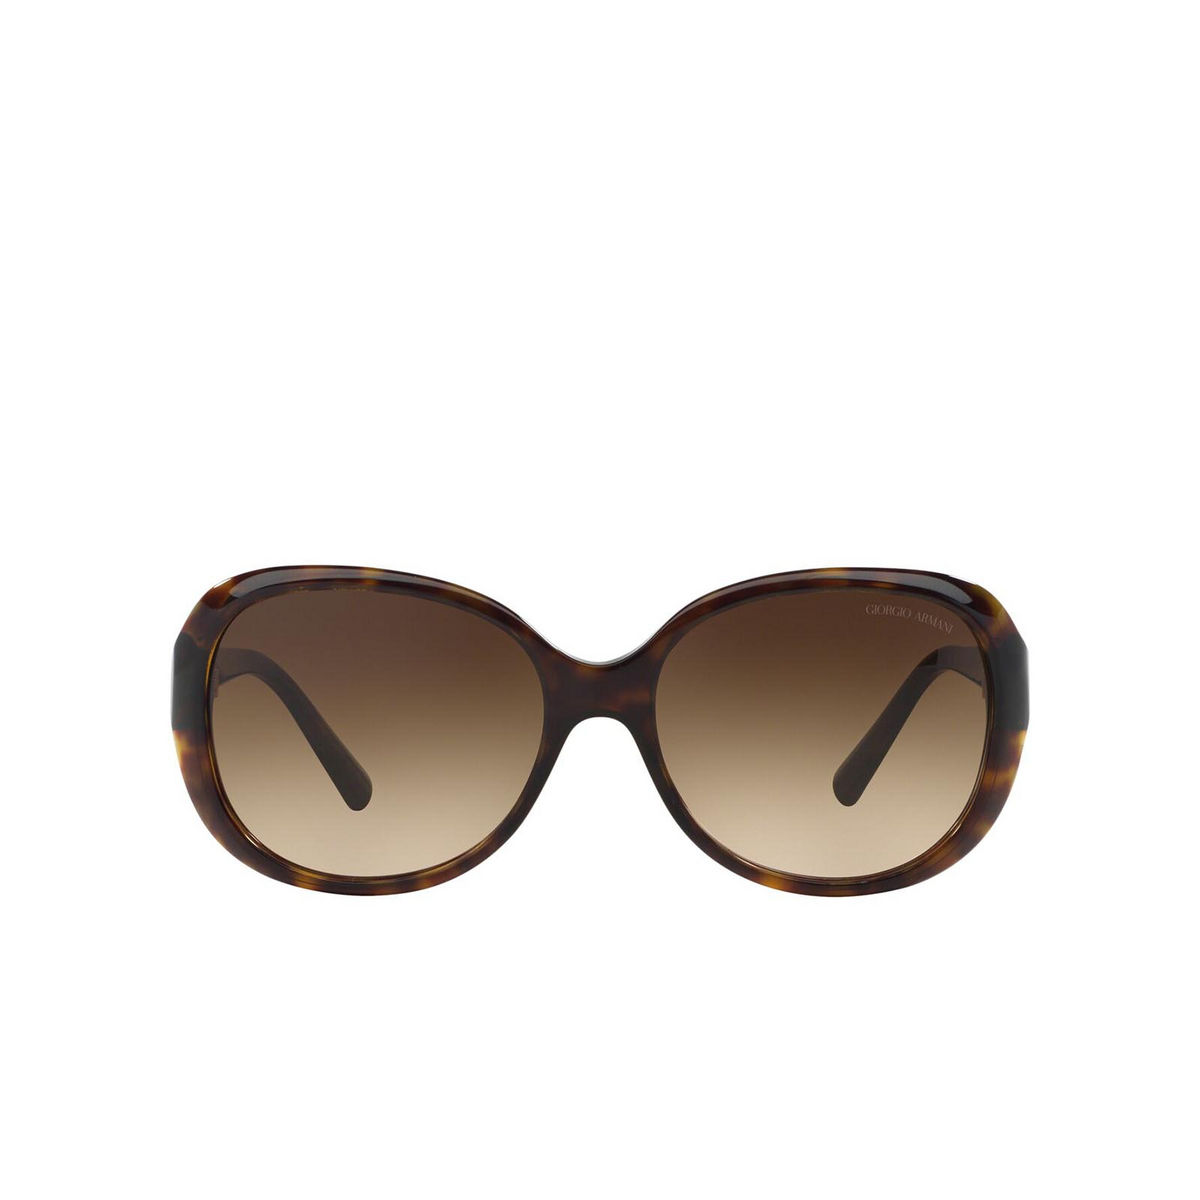 Giorgio Armani® Oval Sunglasses: AR8047 color Havana 502613 - front view.